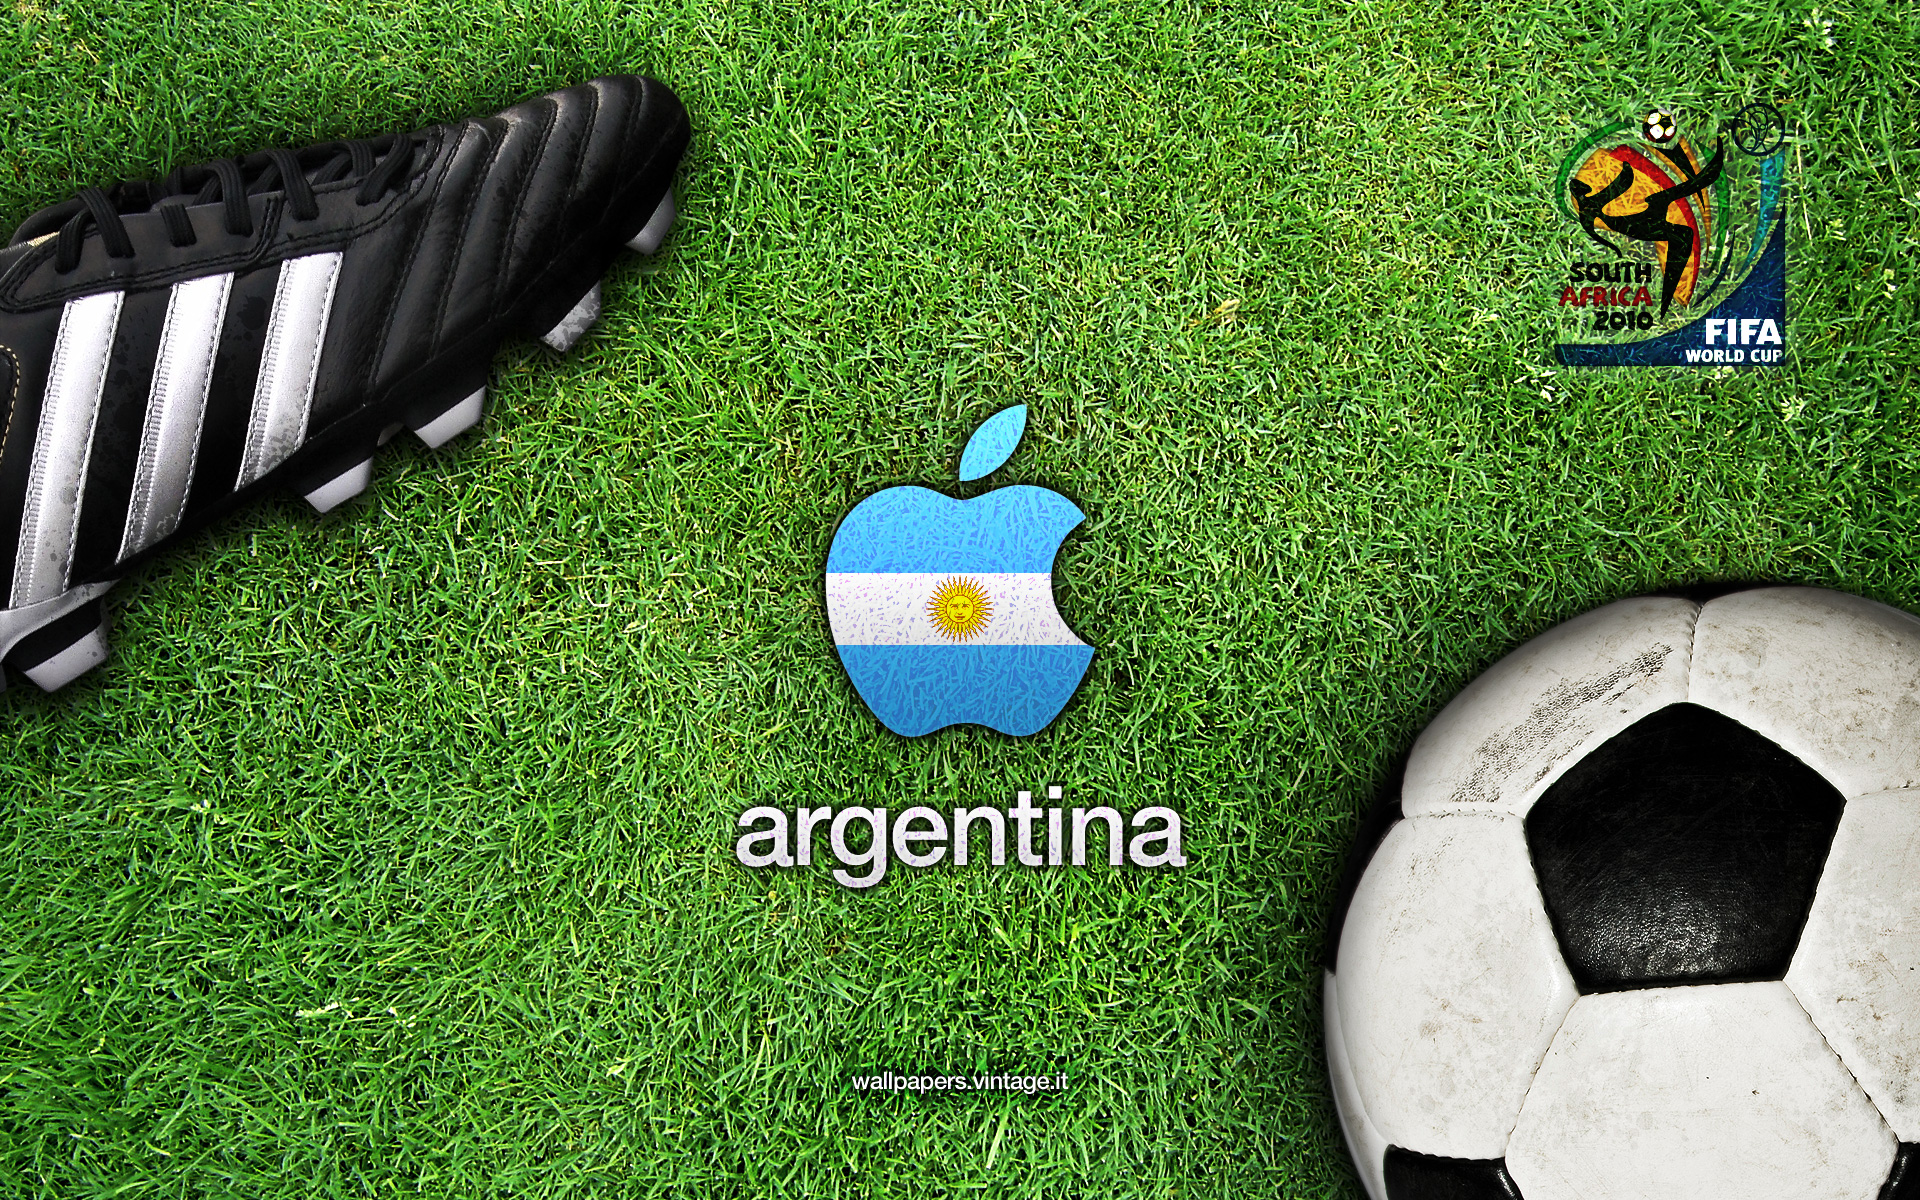 Argentina Fifa World Cup wallpaper - Free Desktop HD iPad iPhone wallpapers